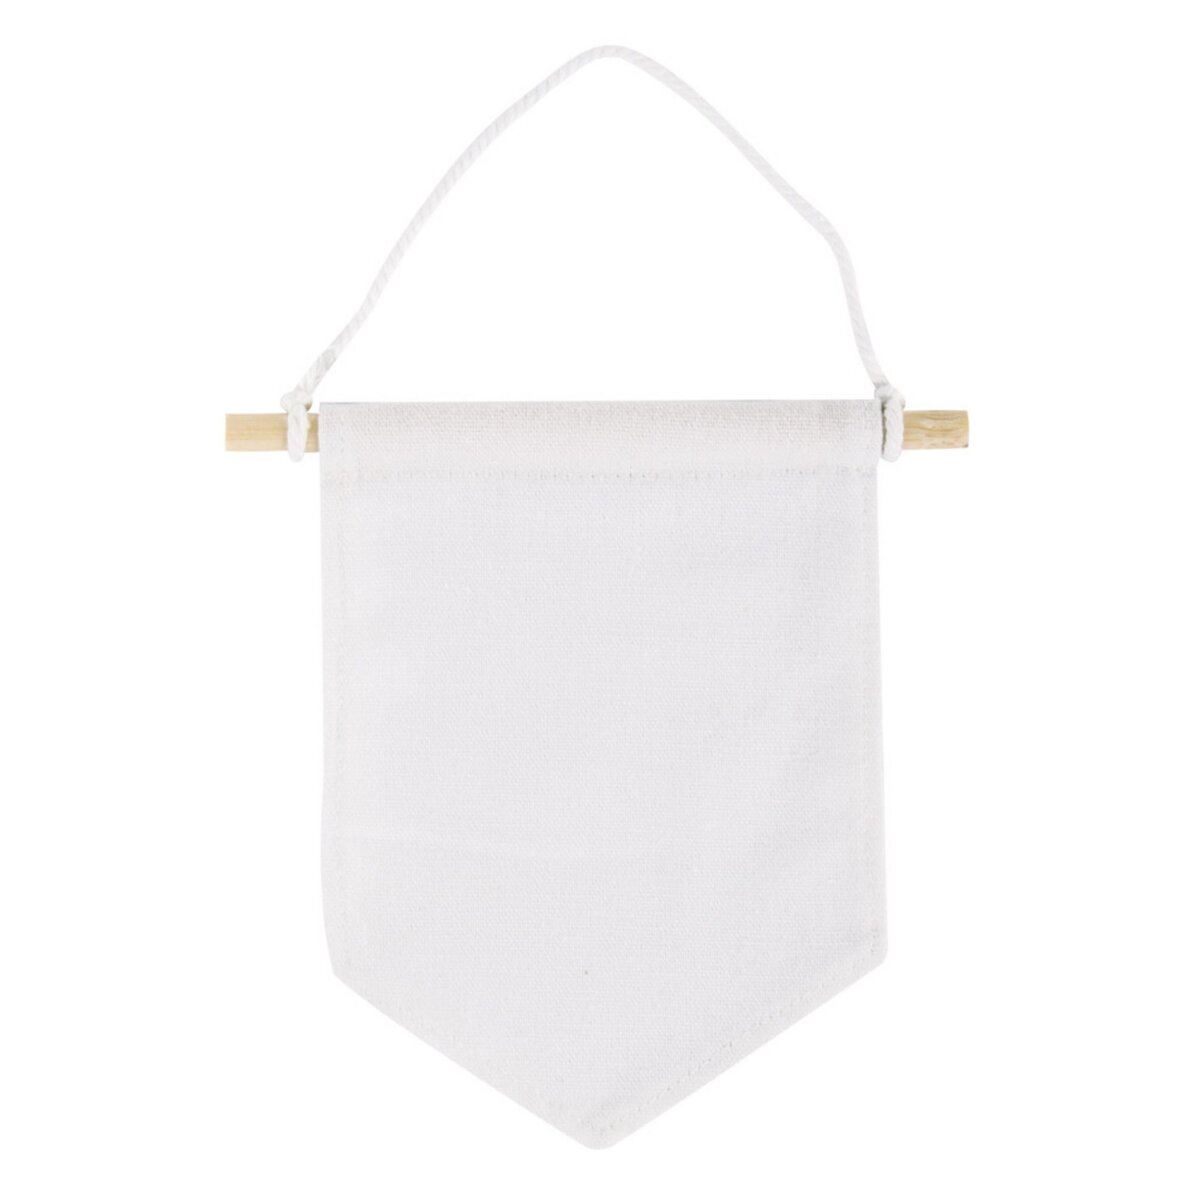 Rayher Fanion de tissu à suspendre, blanc naturel, 14x14cm, 3 pces